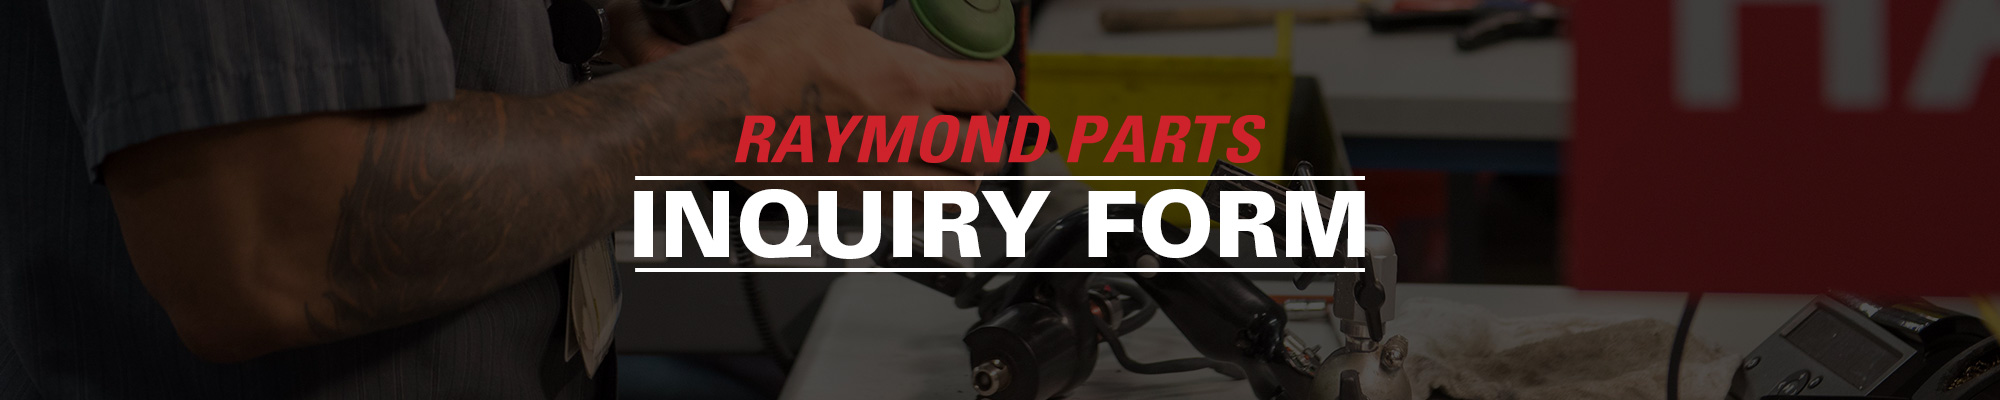 Raymond Parts, inquiry form